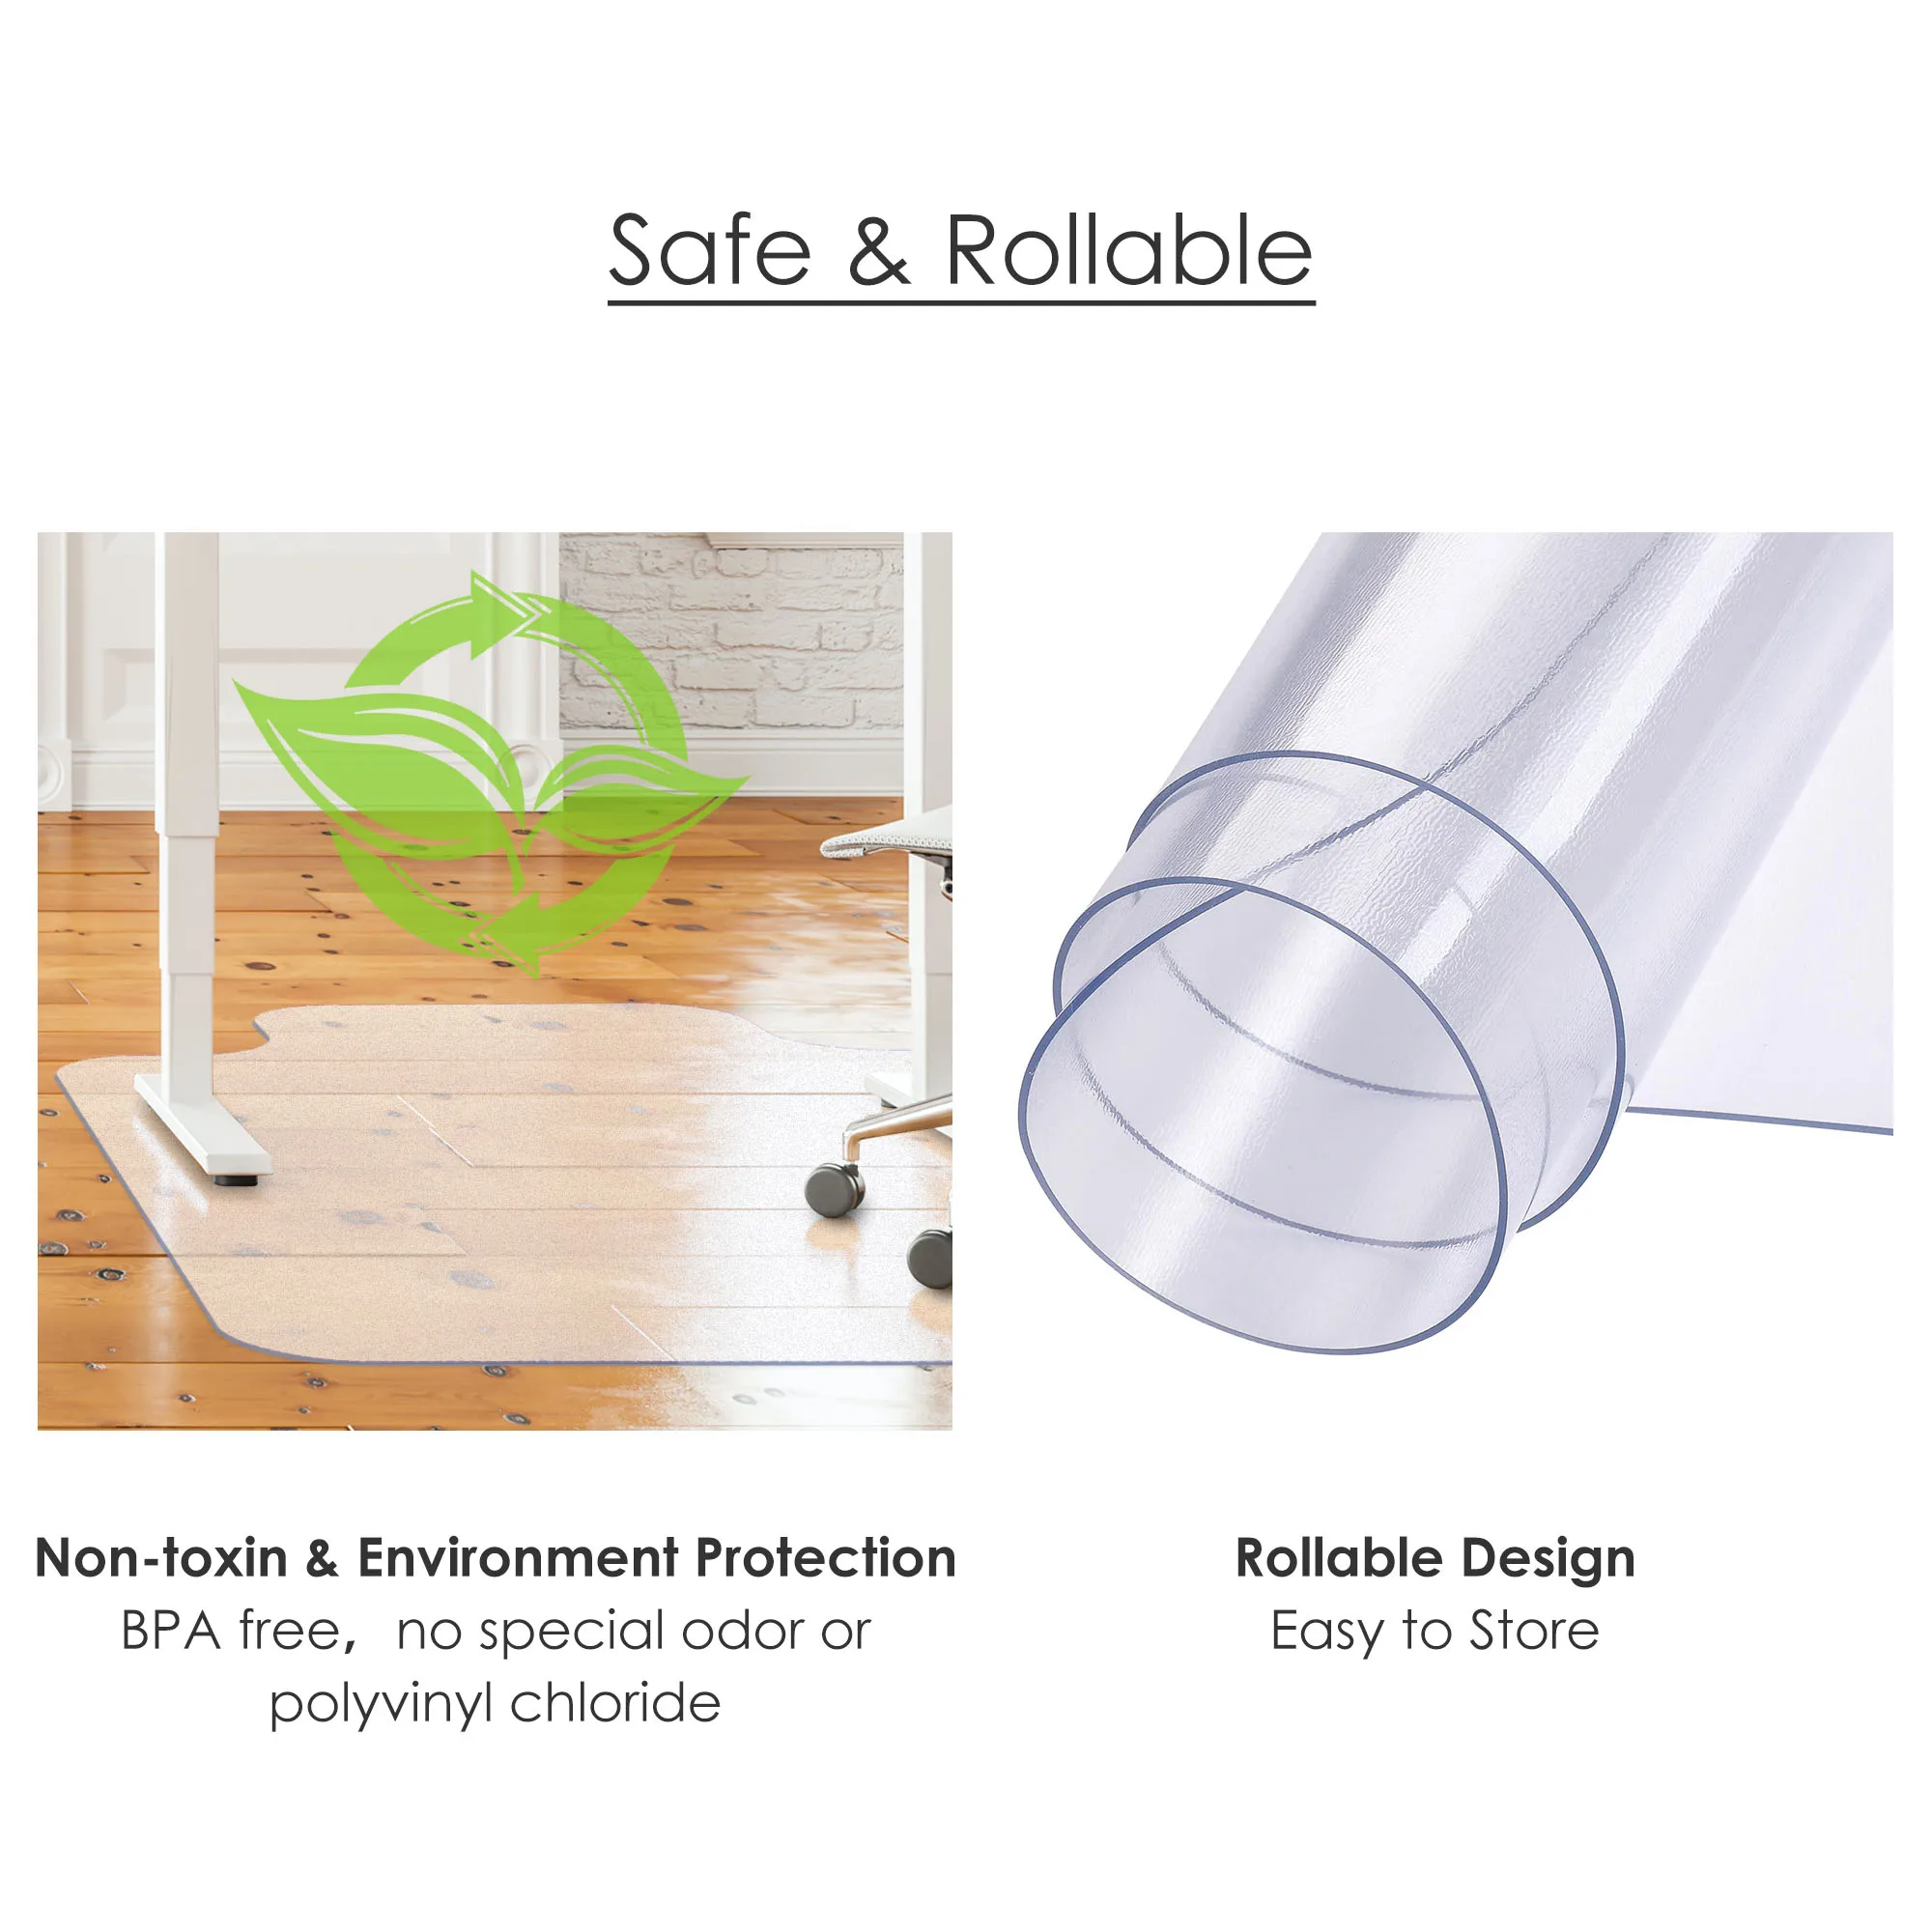 PVC Matte Desk Office Chair Floor Mat Protector for Hard Wood Floors 48 x  36